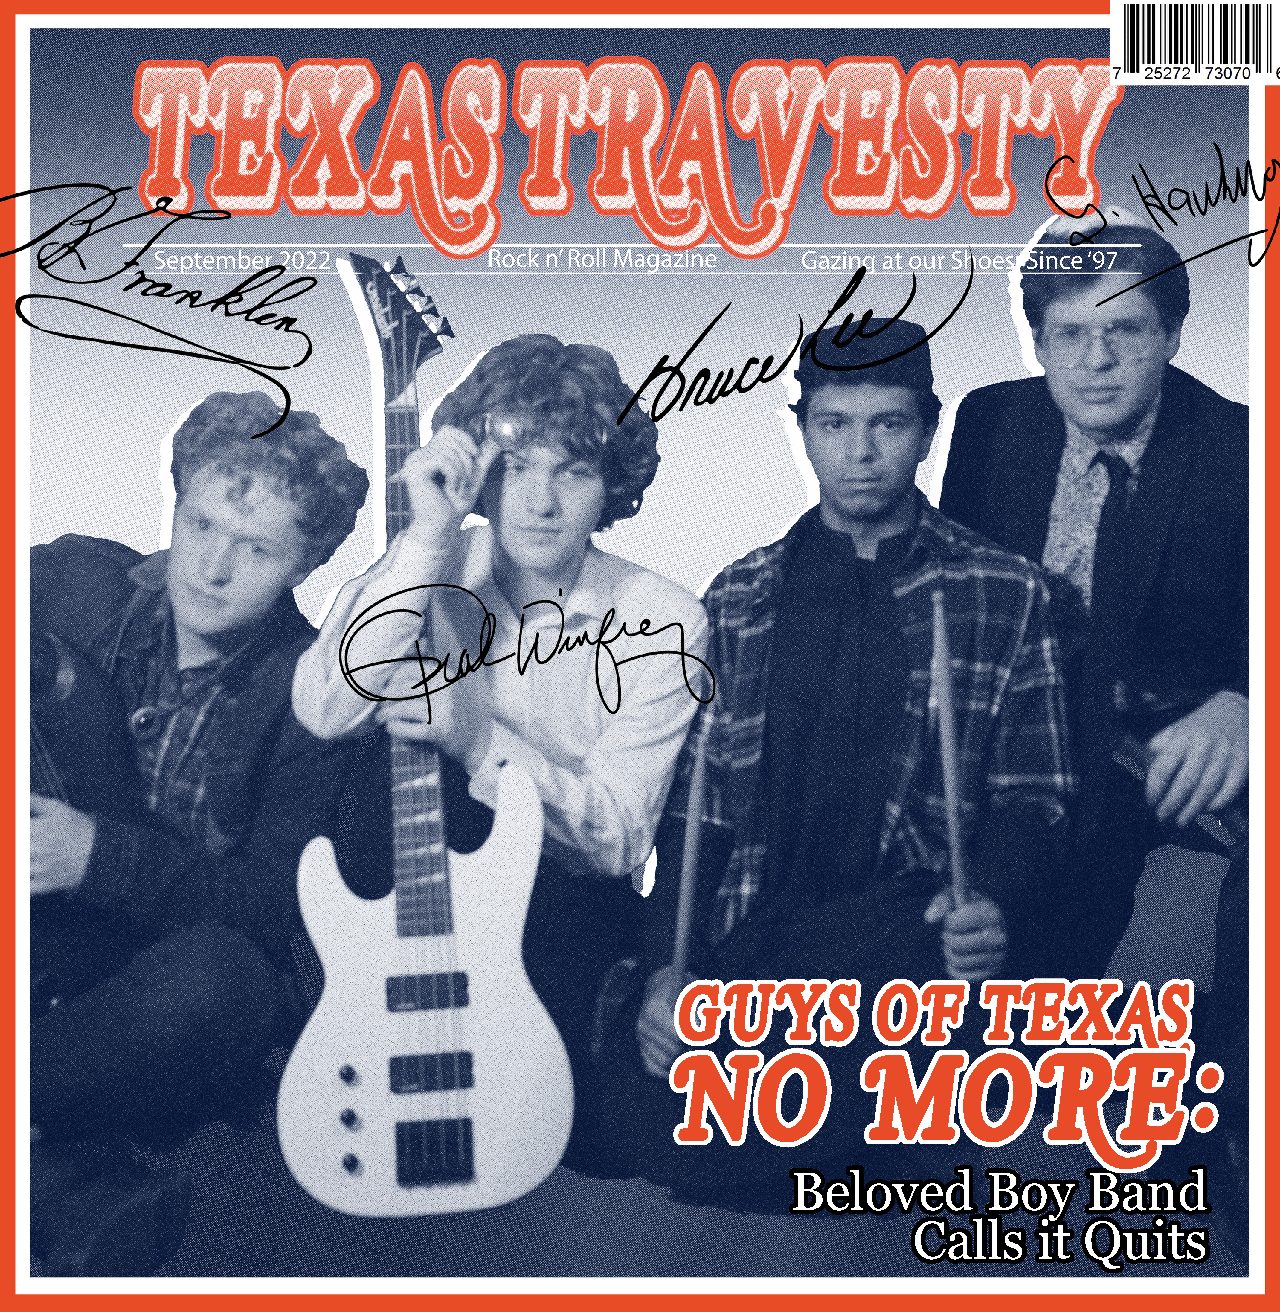 The Texas Travesty – September 2022